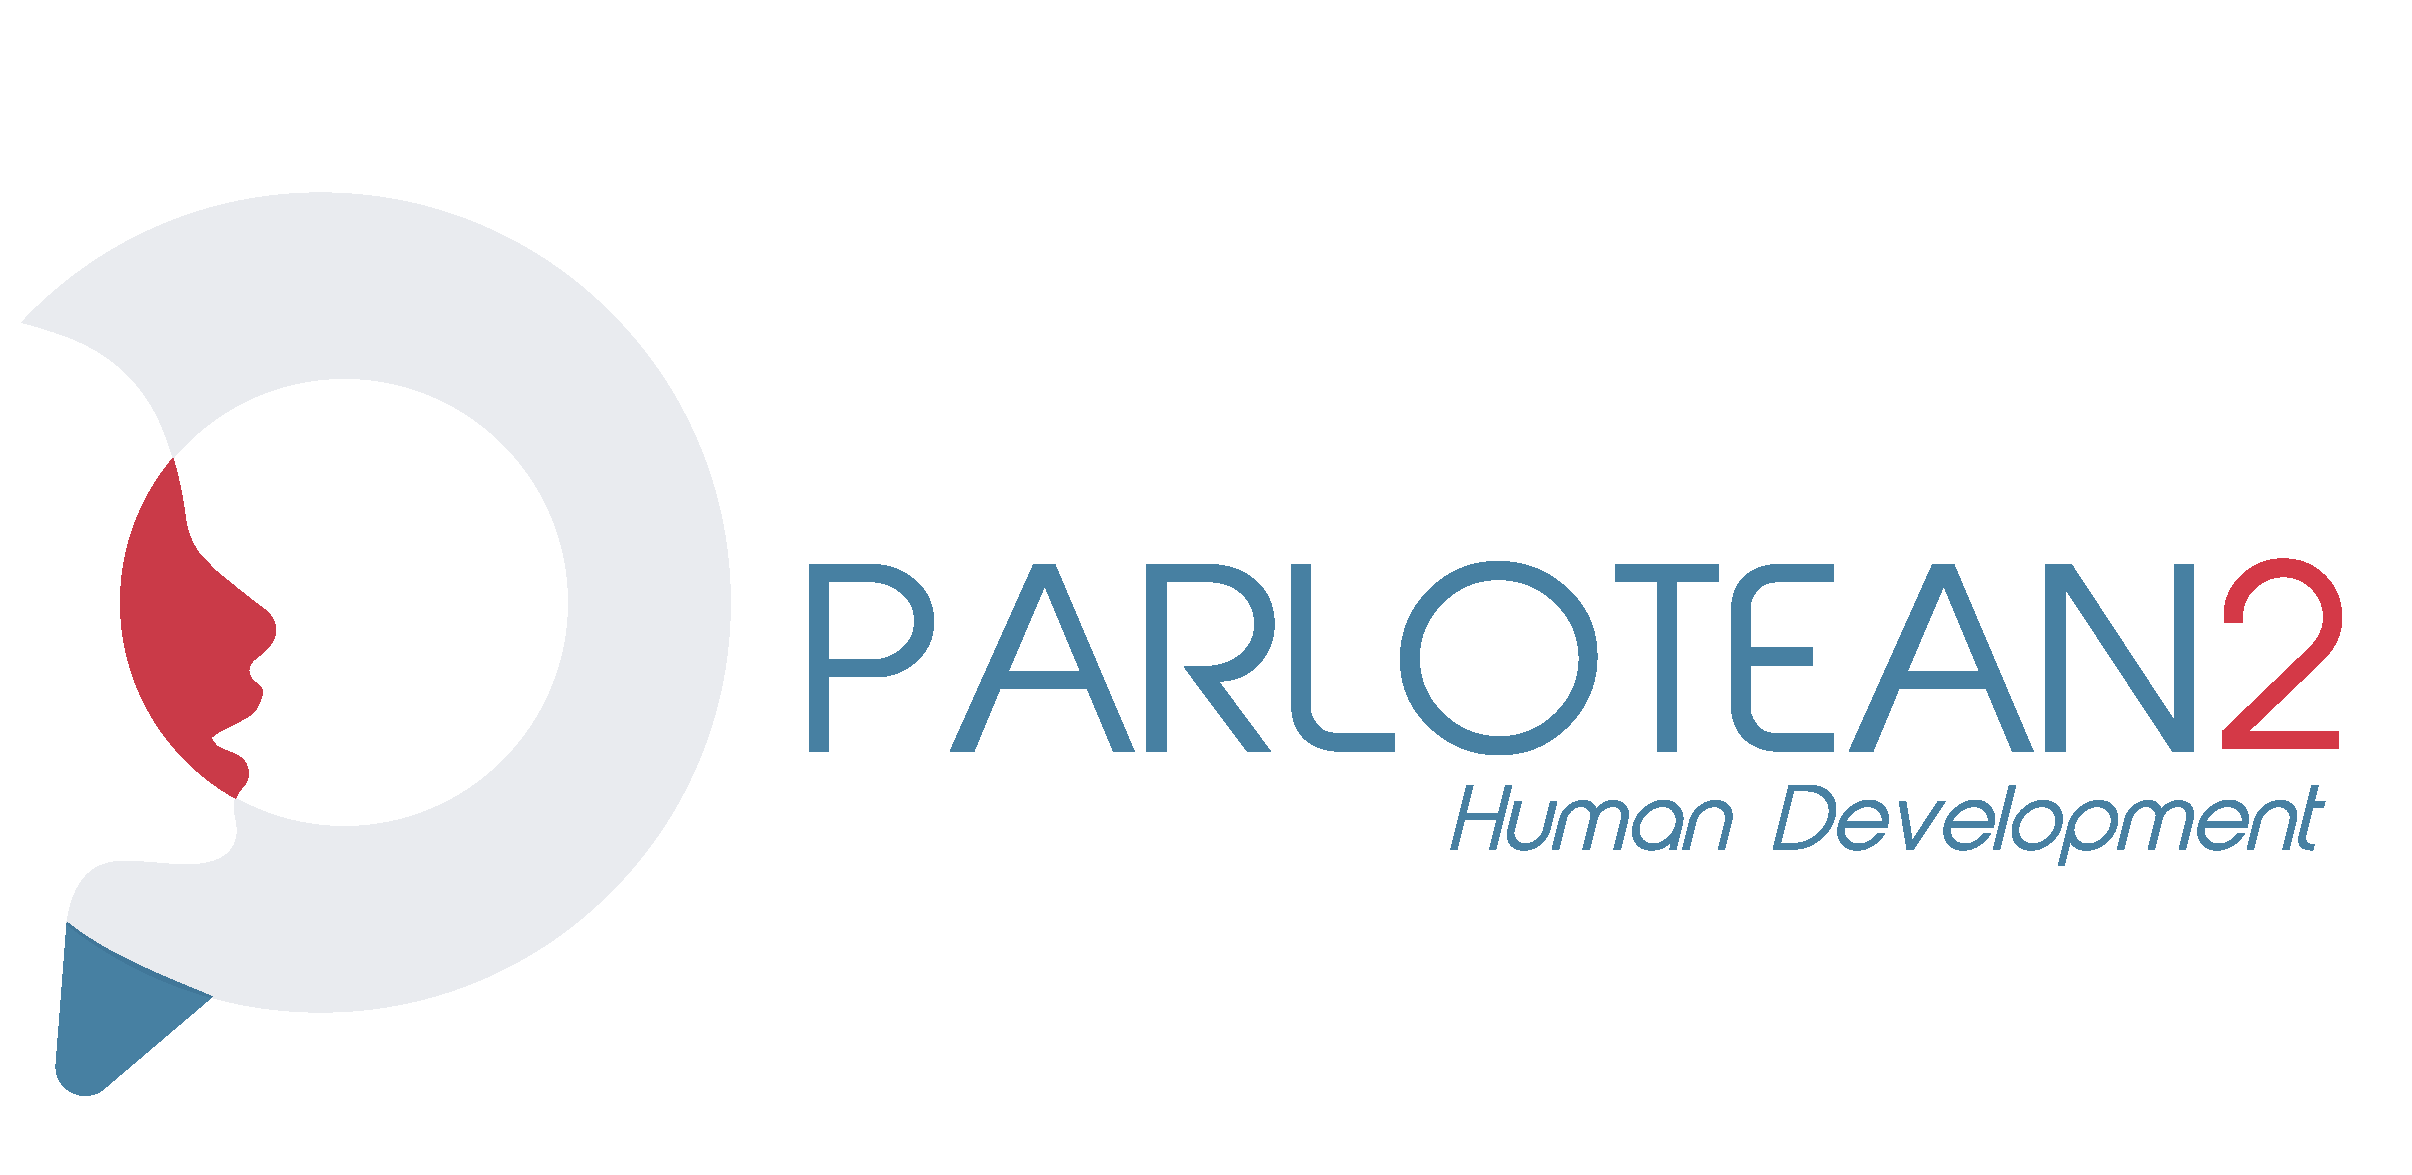 Parlotean2 Human Development